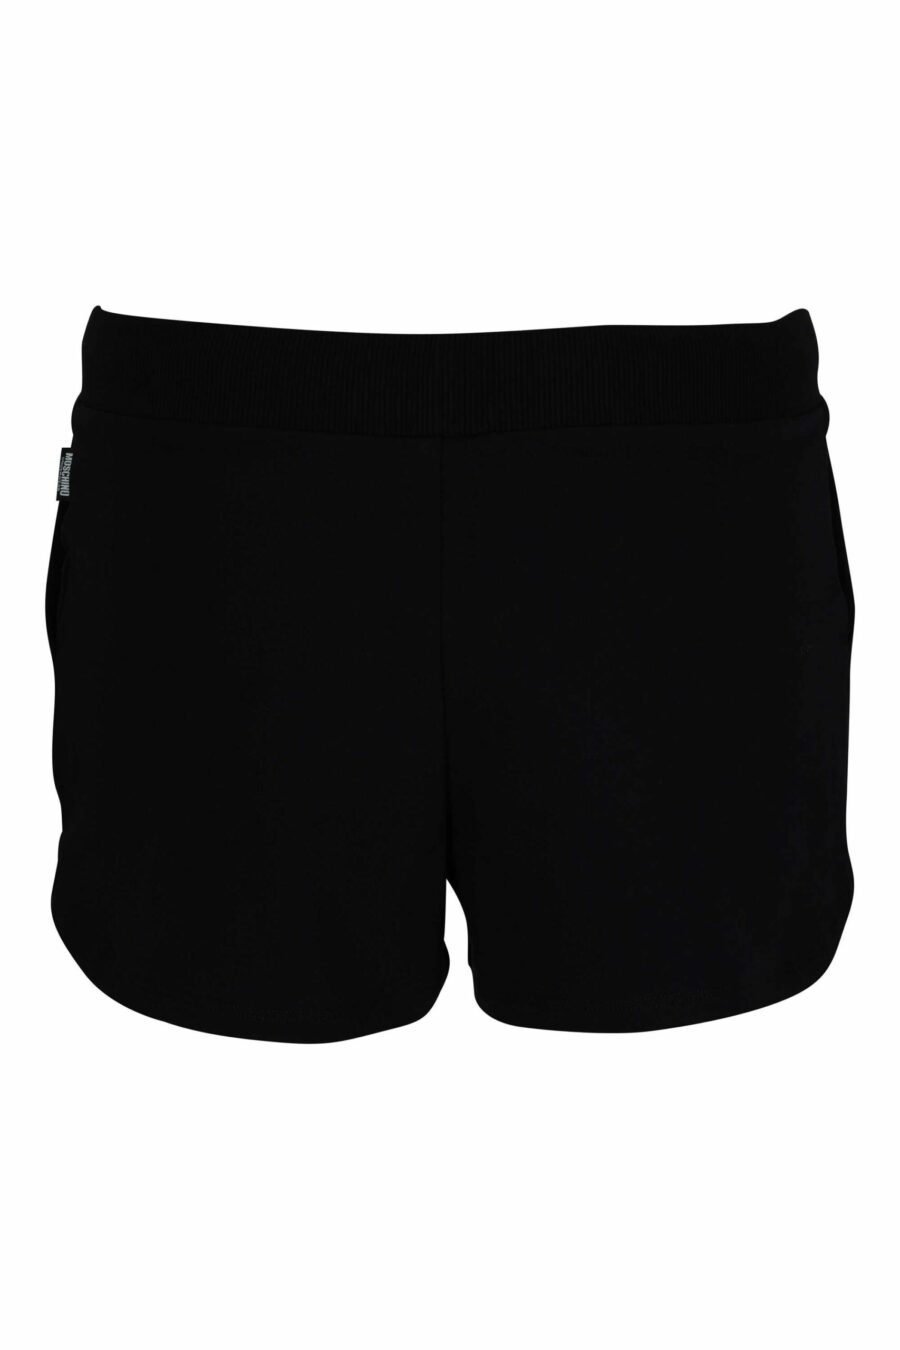 Shorts negros con minilogo oso "underbear" parche - 667113719443 1 scaled